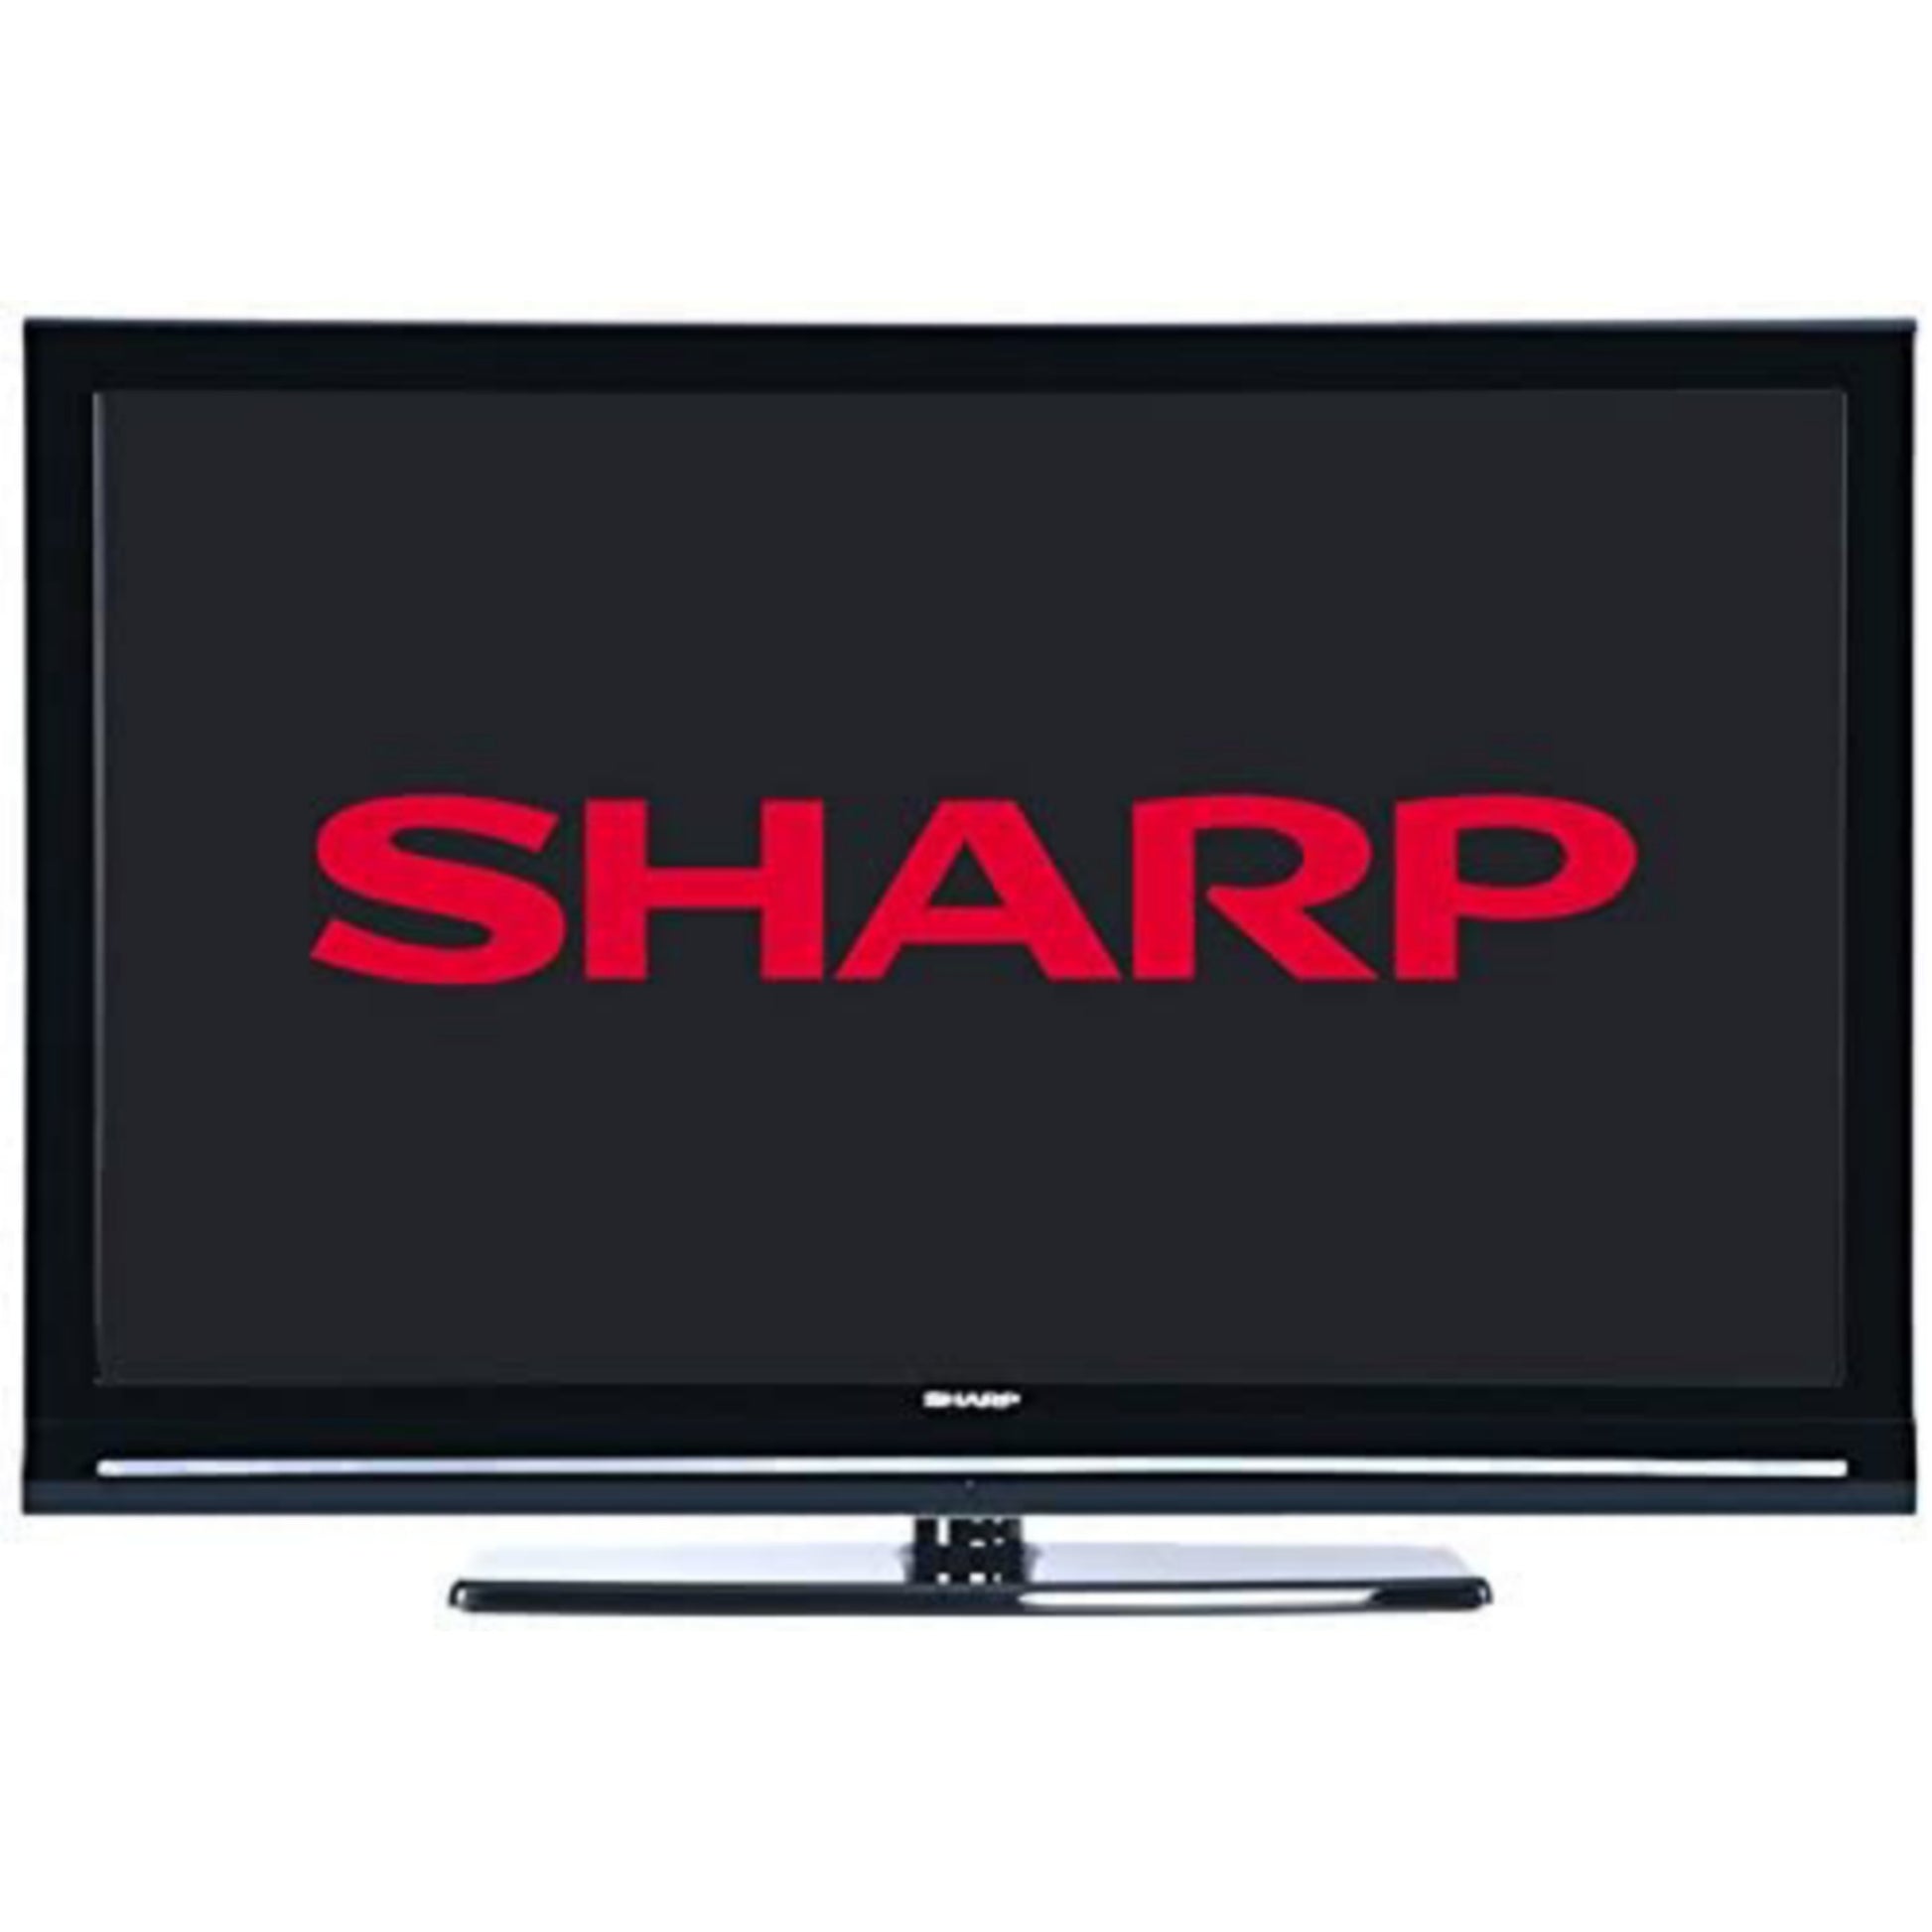 SHARP 26 Inch HD Ready LCD TV - London Used